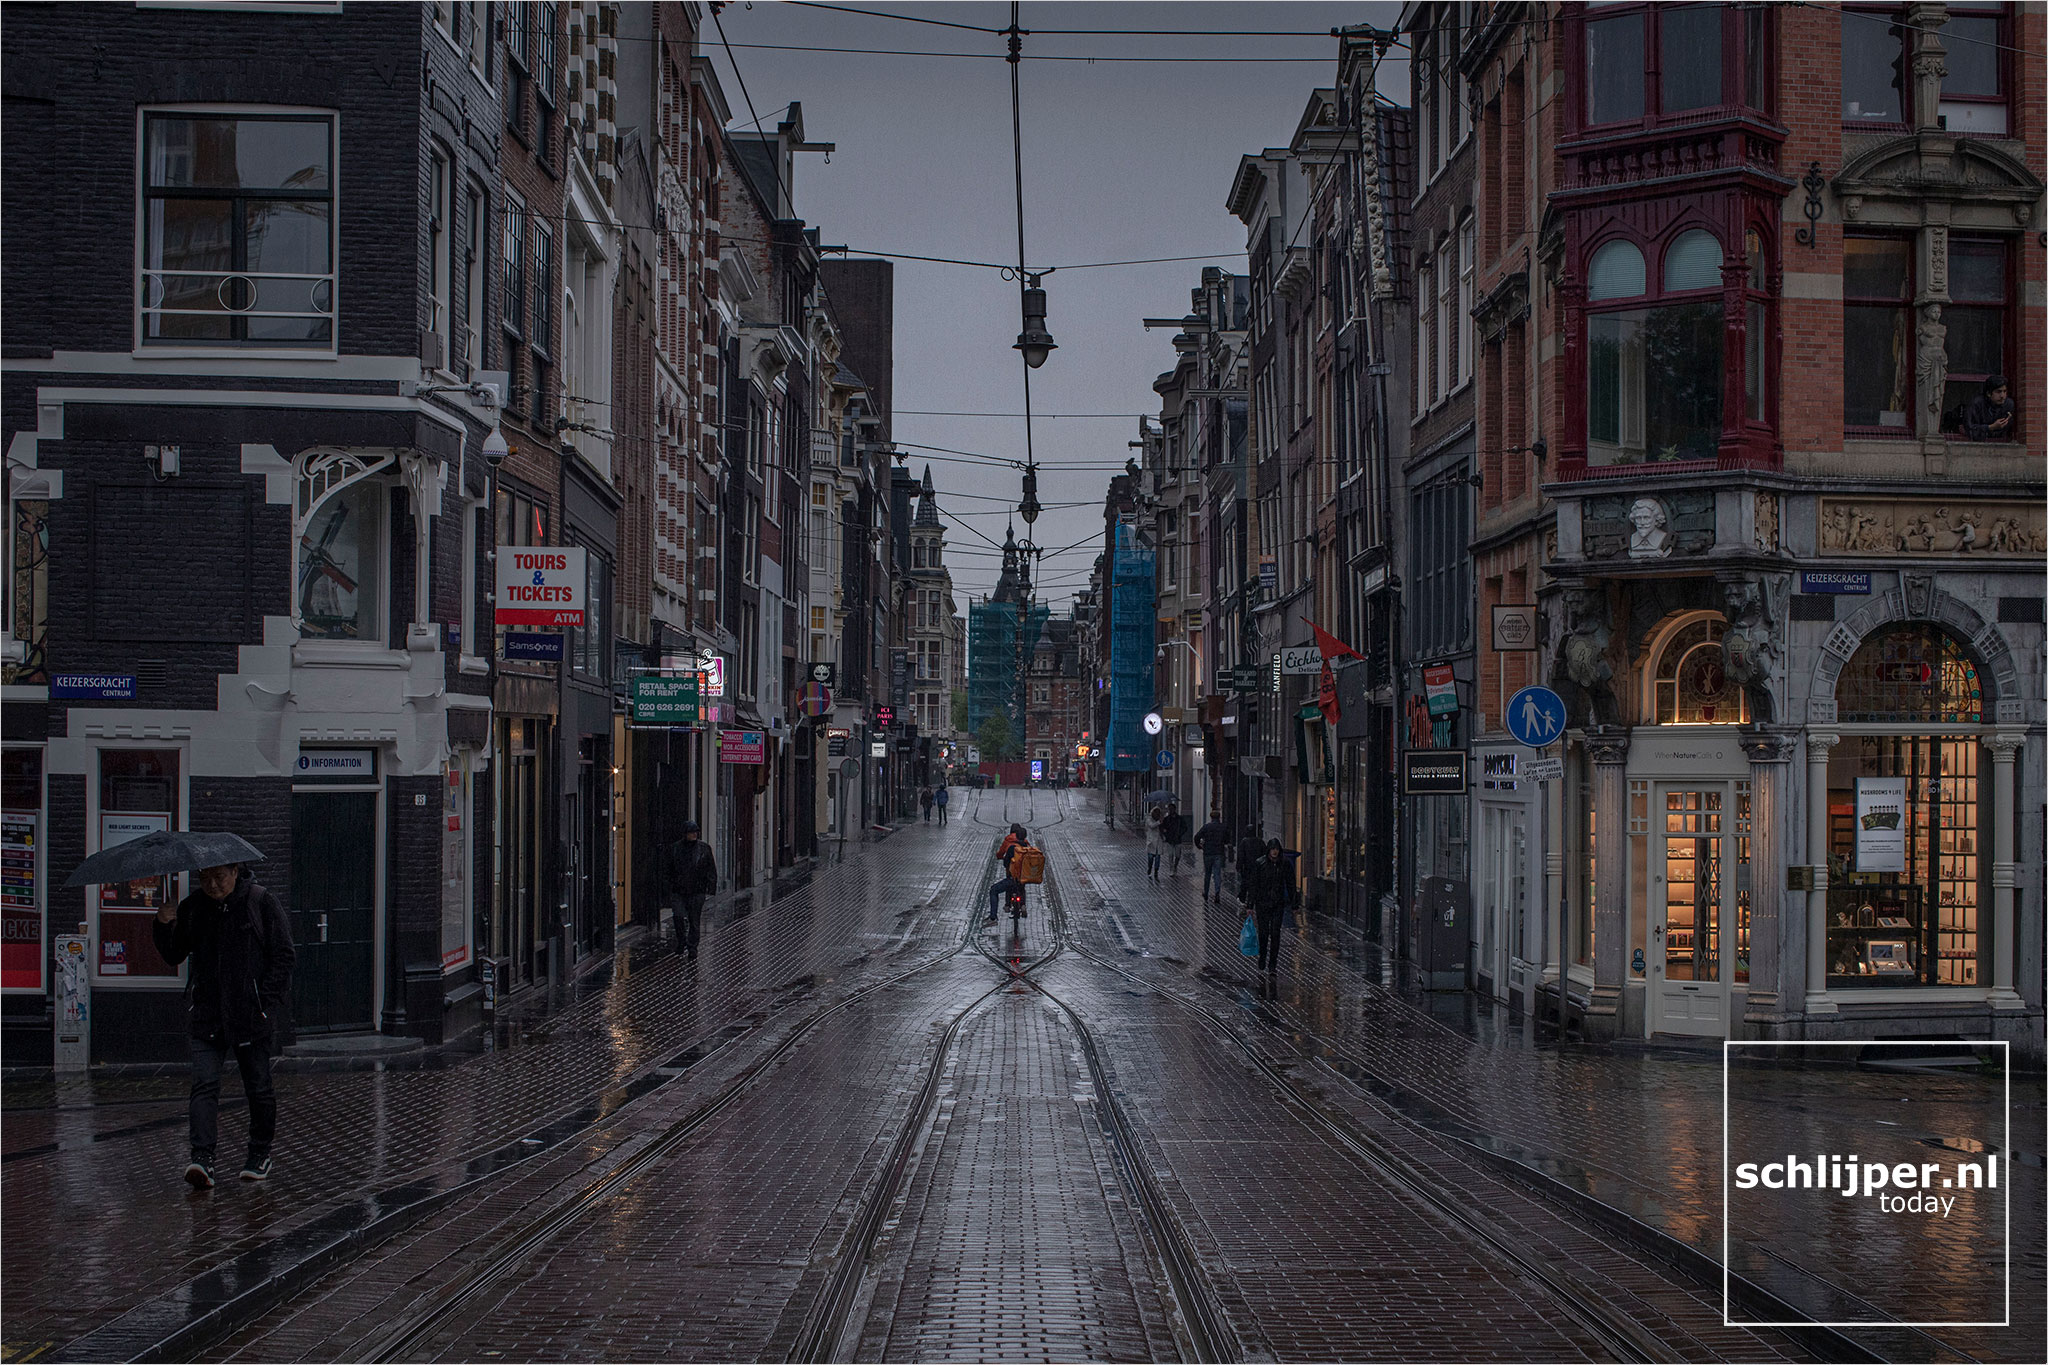 The Netherlands, Amsterdam, 24 mei 2021